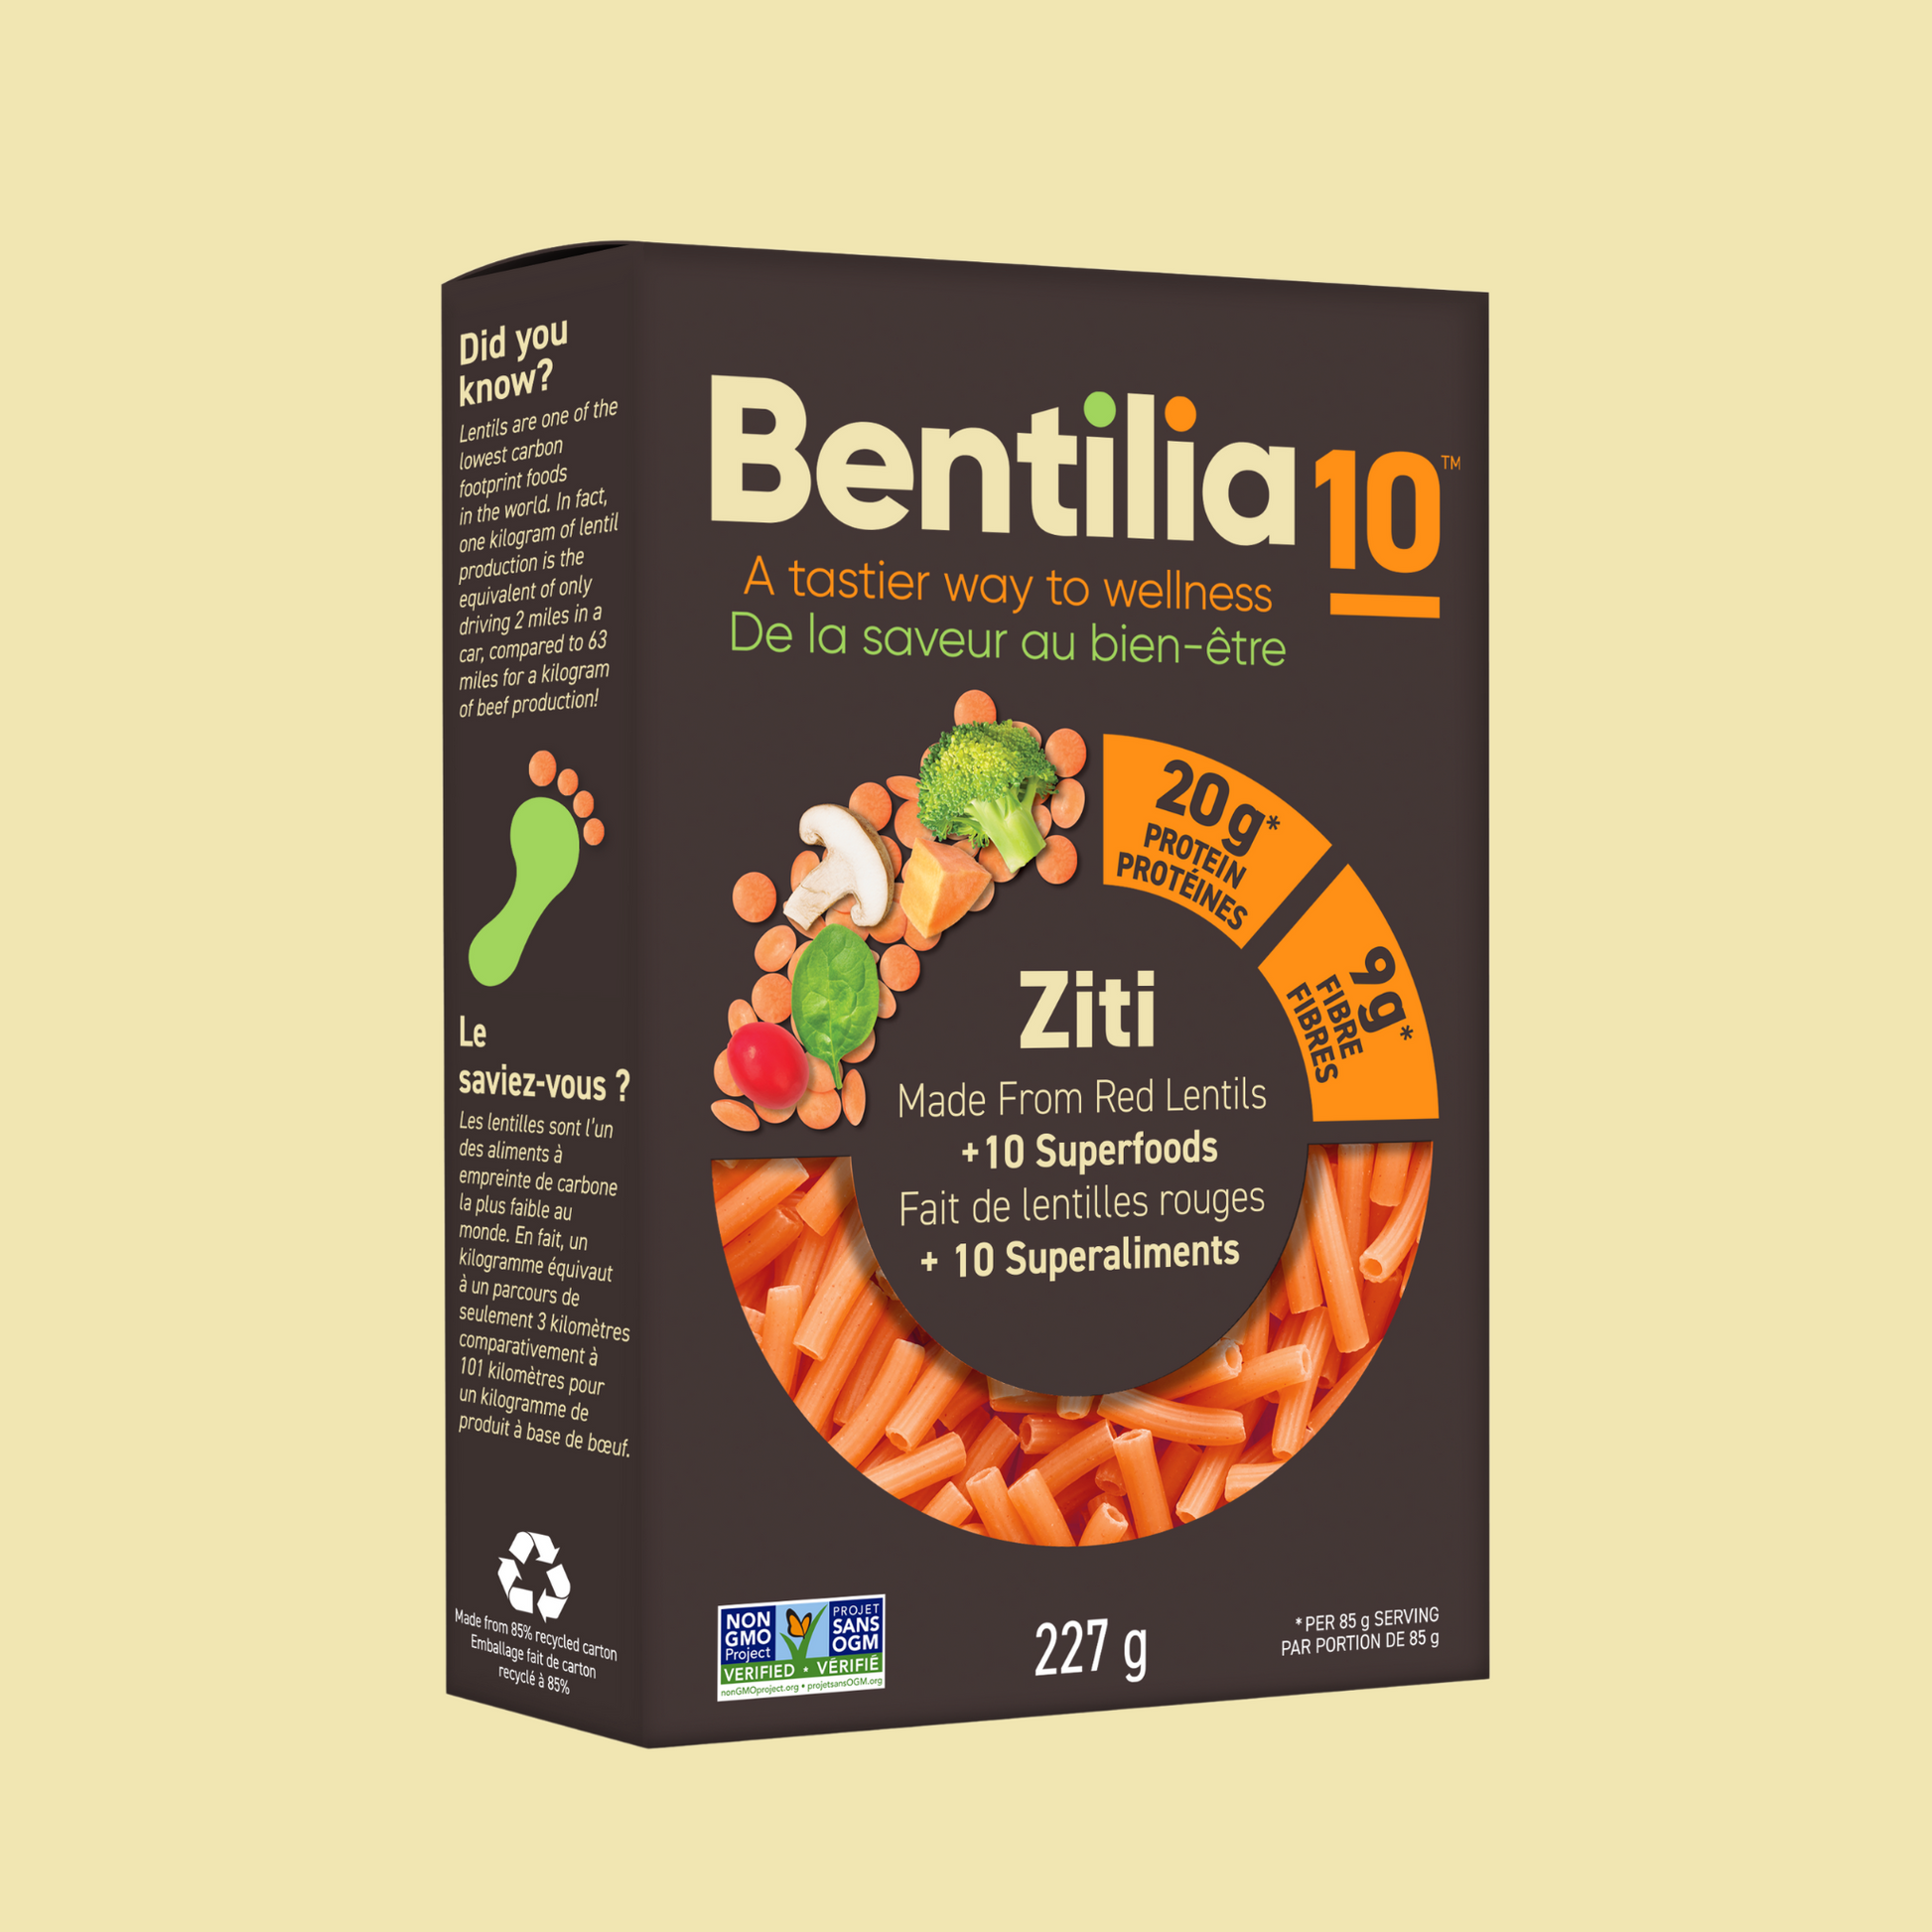 BENTILIA 10 ZITI - 6 BOXES - Bentilia 